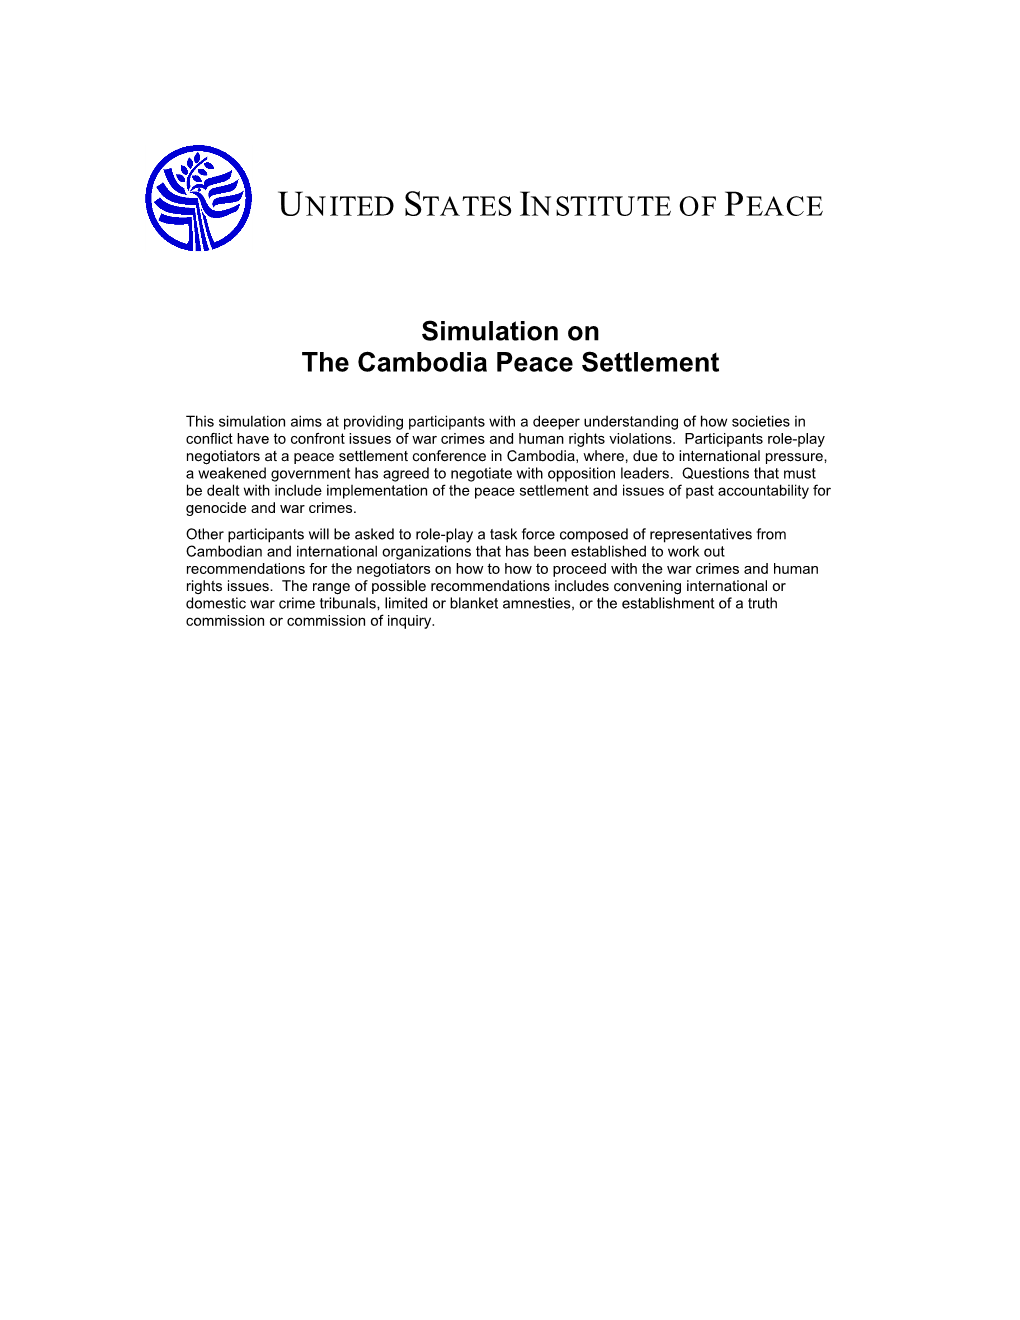 The Cambodia Peace Settlement